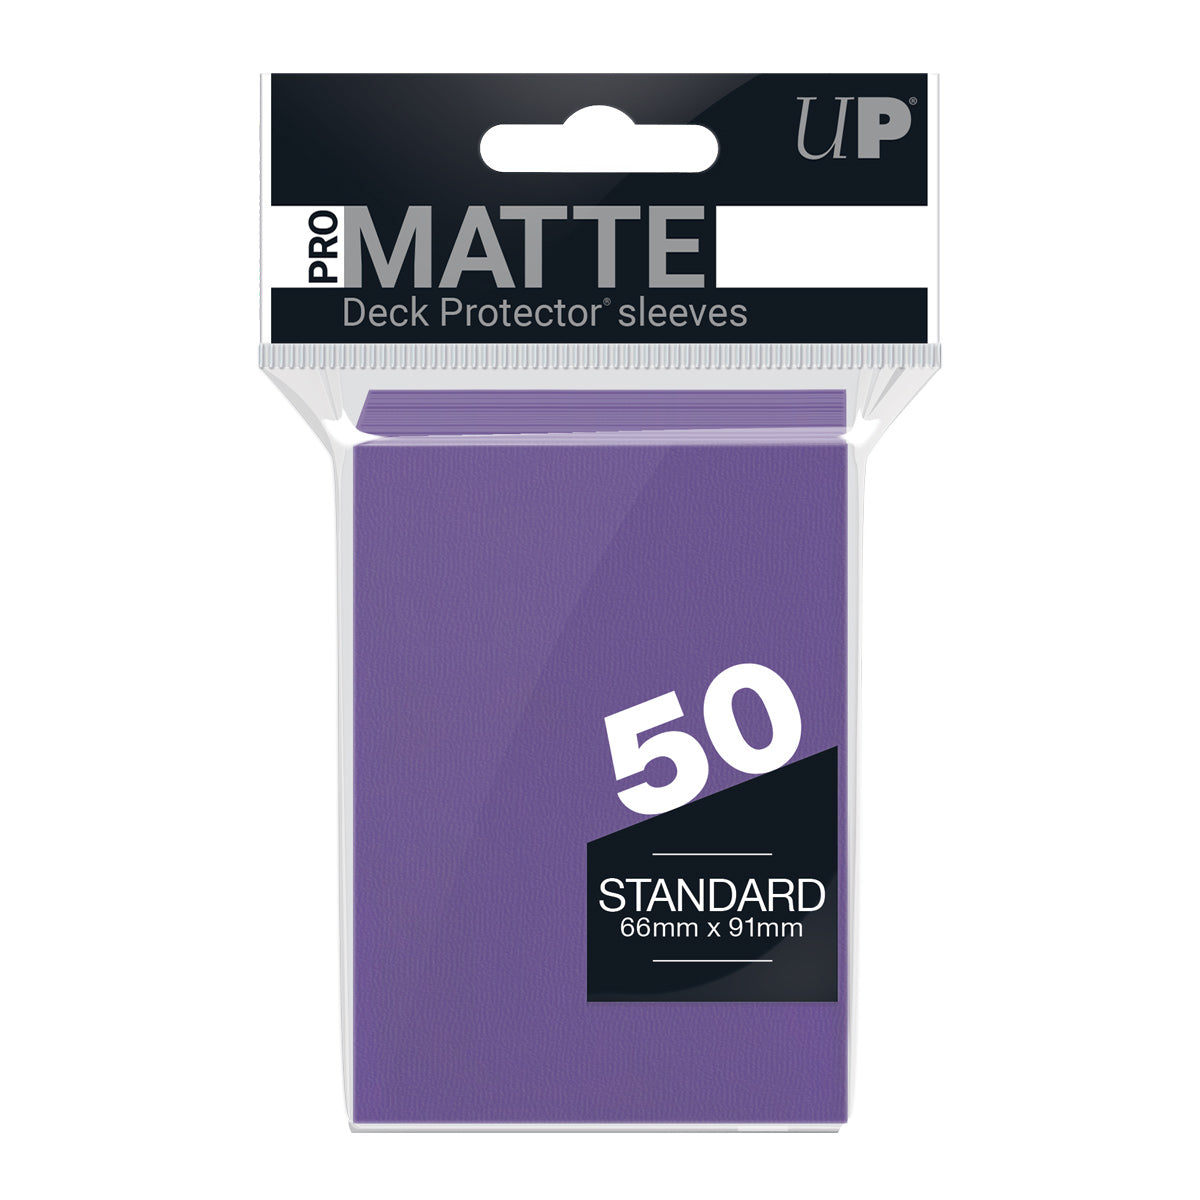 Ultra PRO Card Sleeve Pro-Matte Standard 50ct - Purple